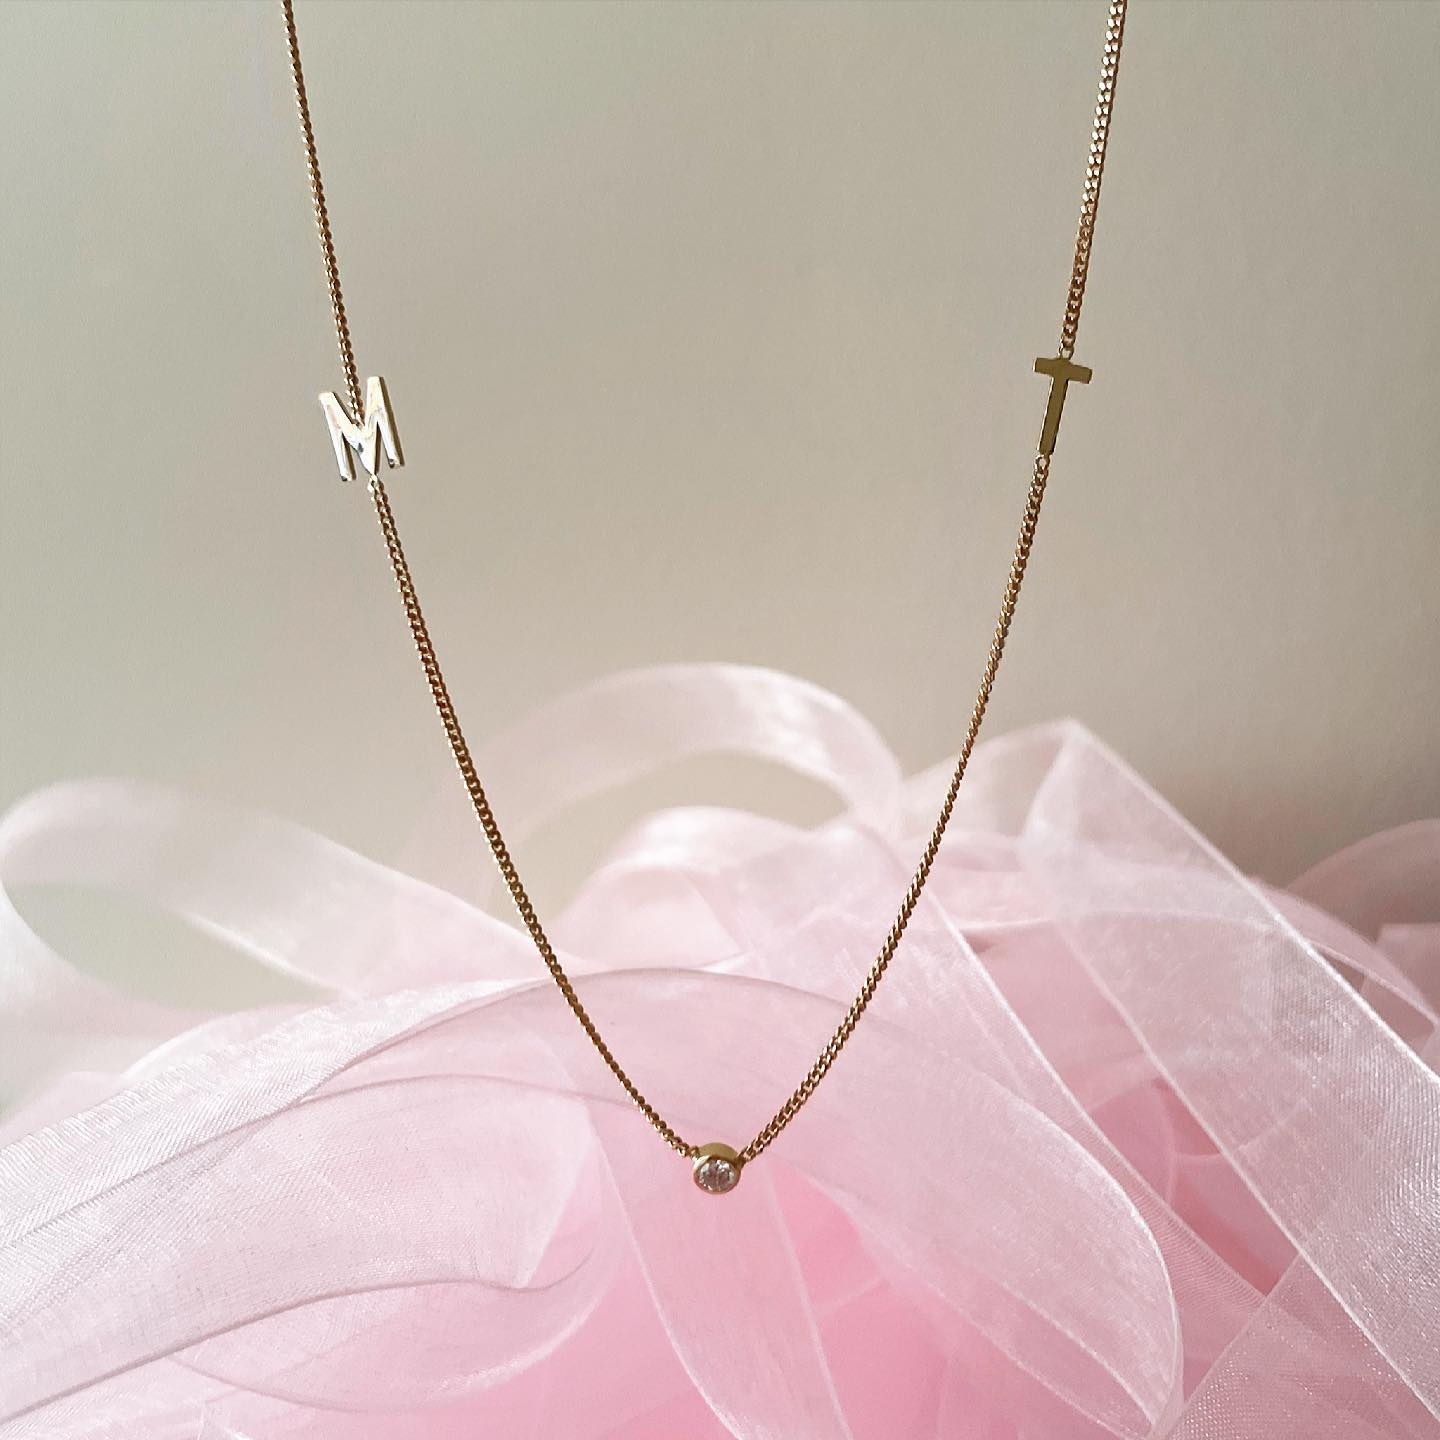 LETTER & GEM necklace - BYVELA jewellery